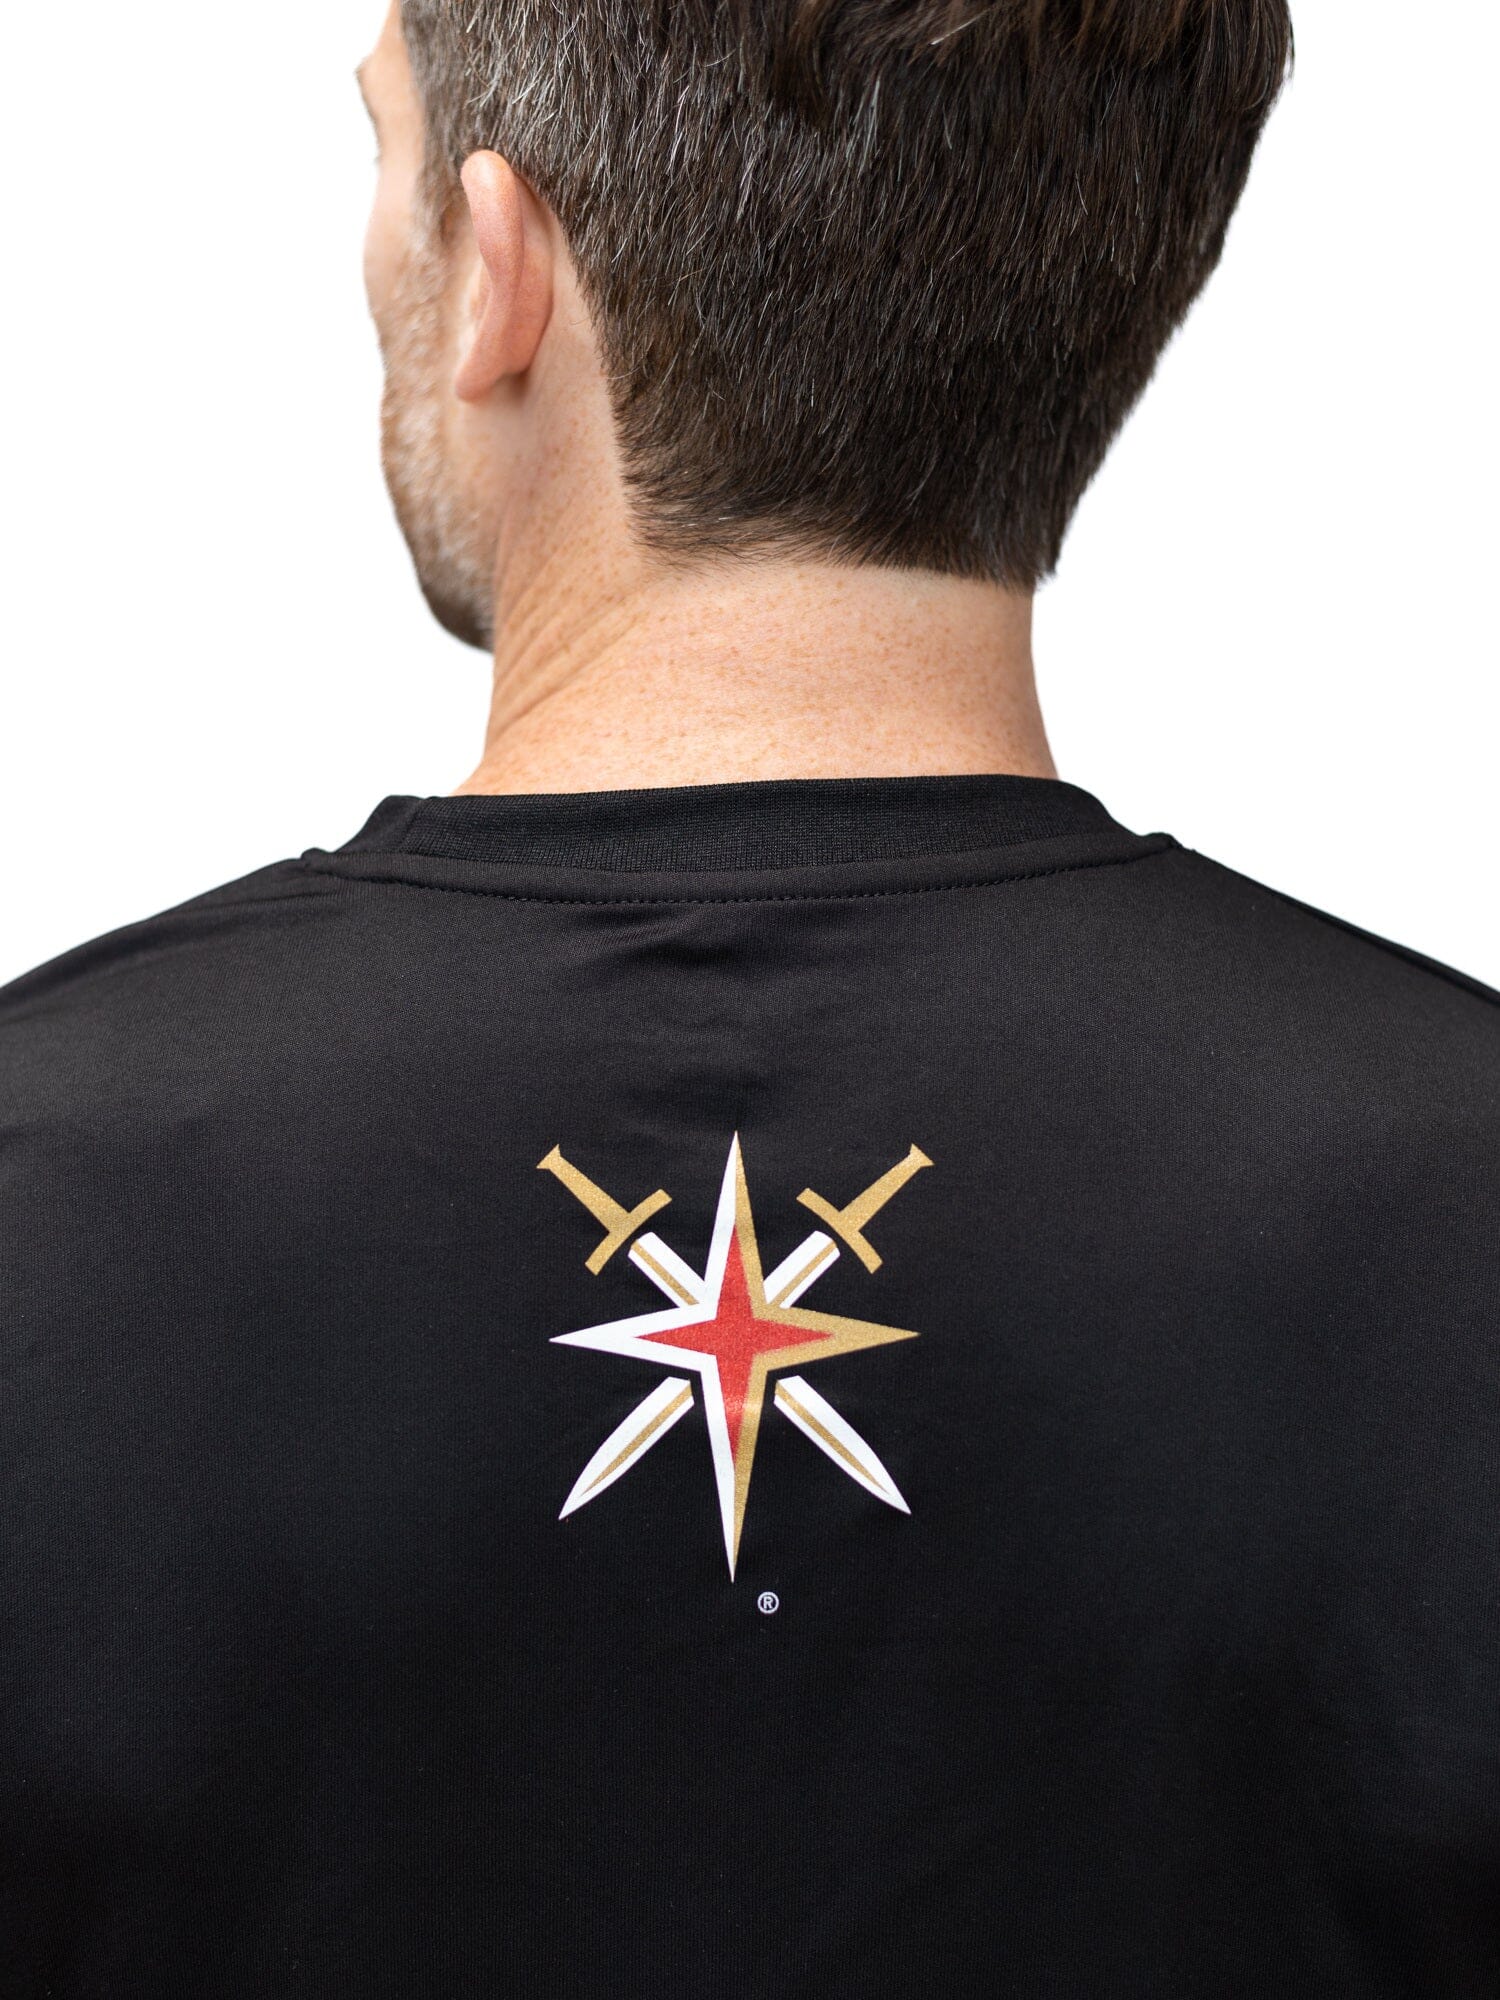 Vegas Golden Knights "Full Fandom" Moisture Wicking T-Shirt - Back Logo